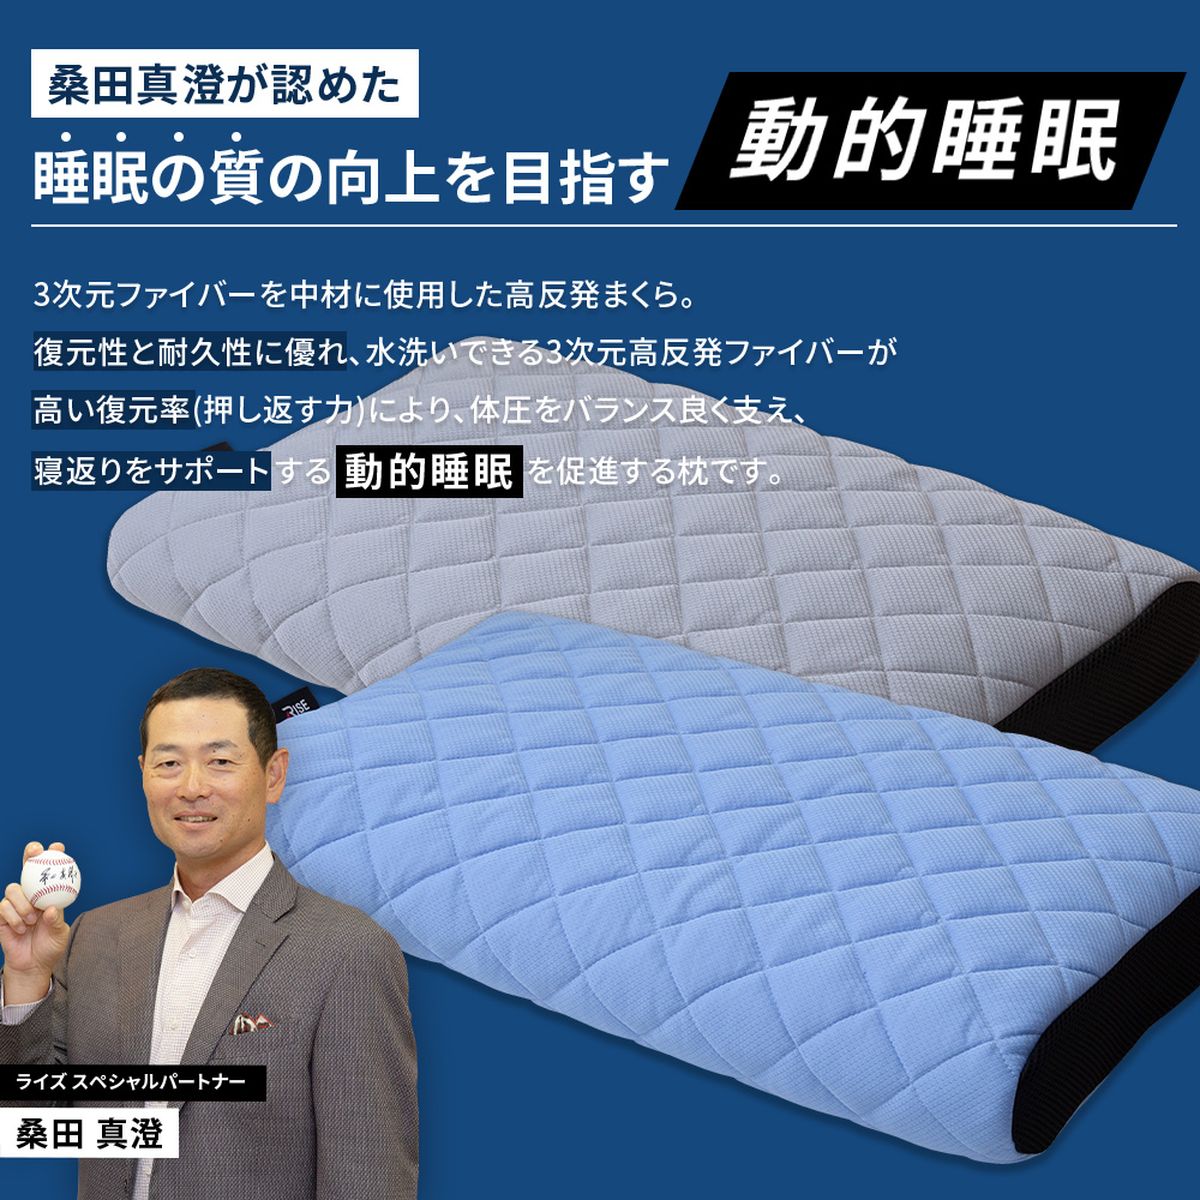 RISE Sleep Niceday 桑田真澄式 動的睡眠 高さ調整高反発ピロー 35×60cm ブルー